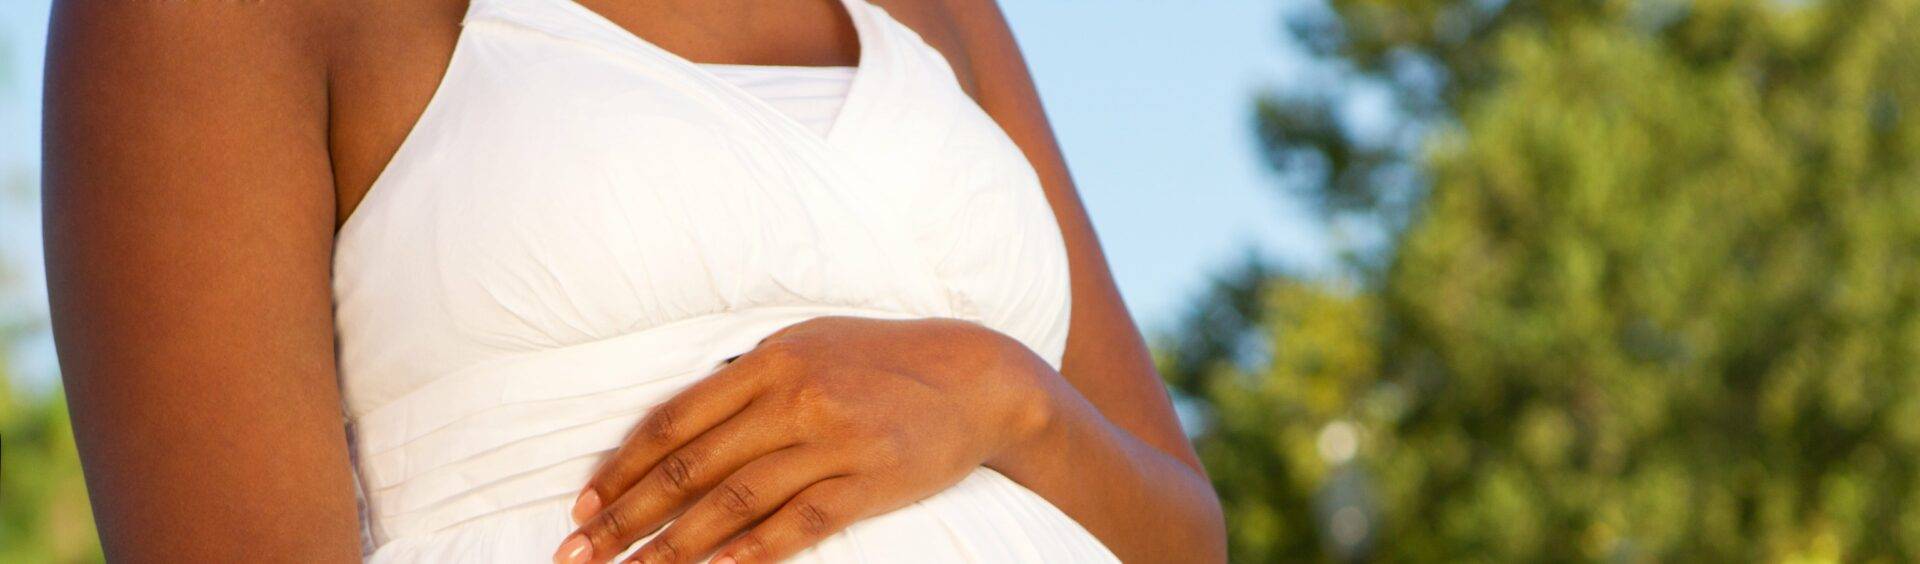 banho de sol durante a gravidez